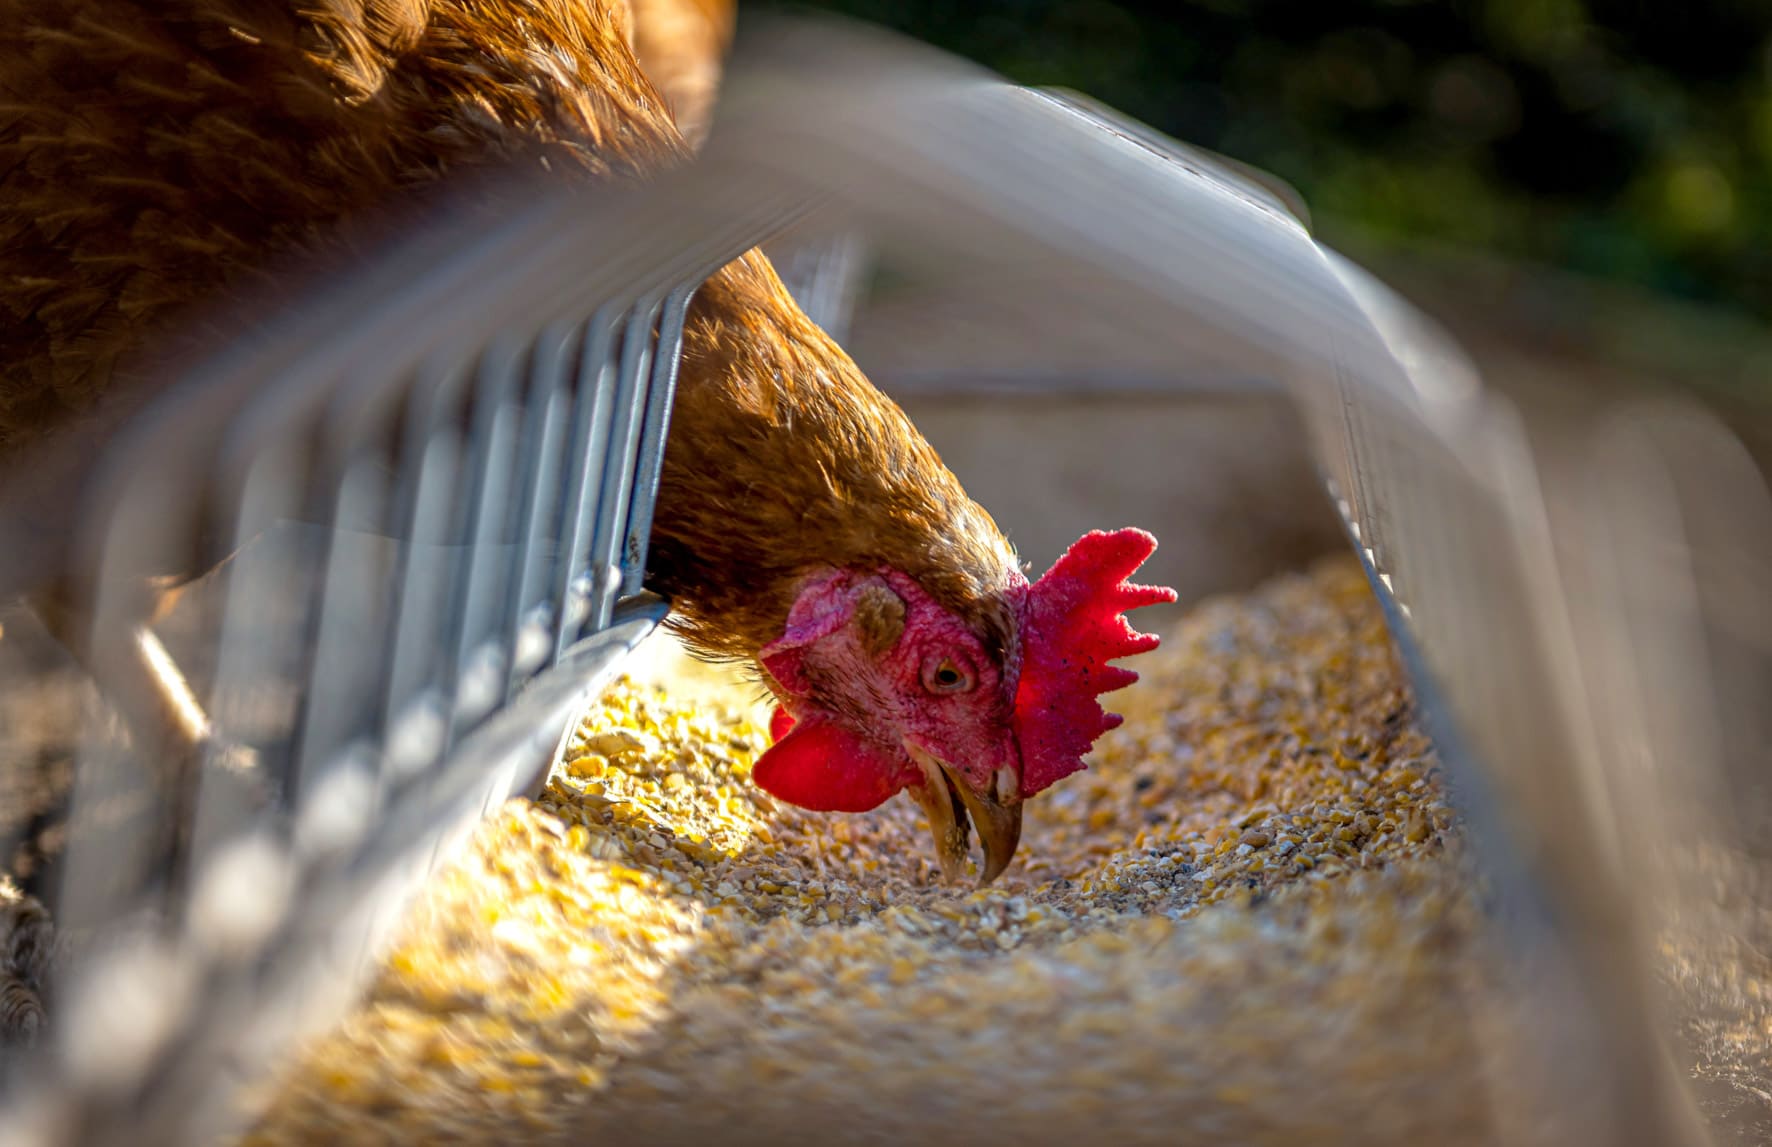 Retiro del alimento pre-faena en pollos de engorde